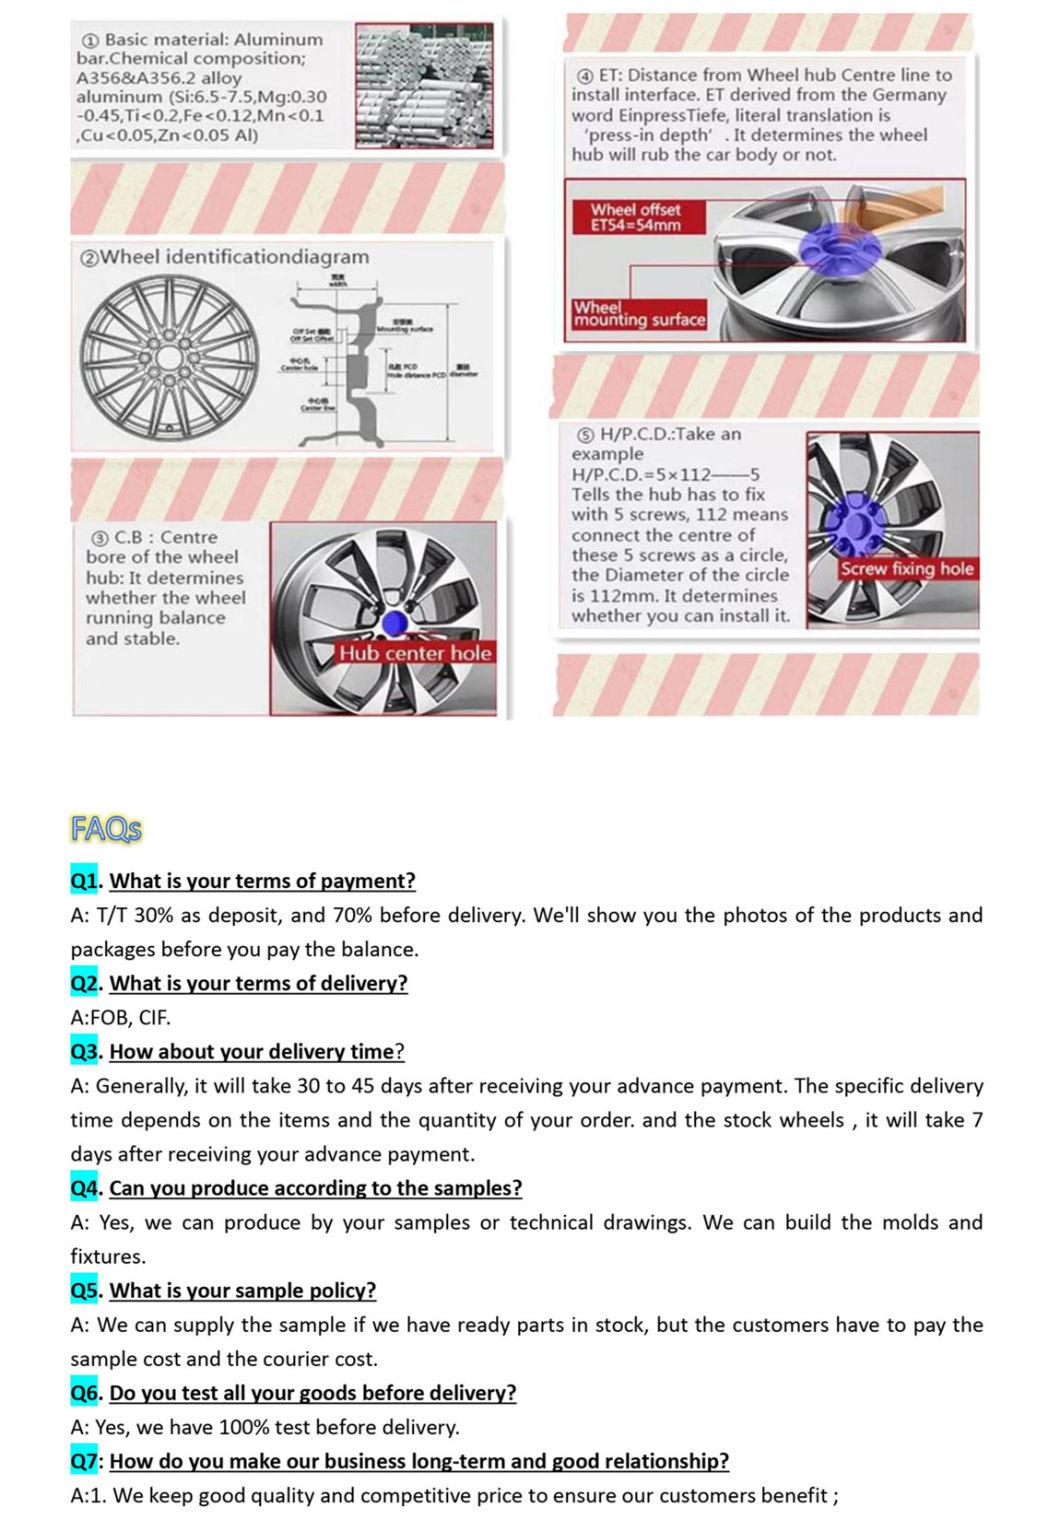 Replica Wheels Passenger Car Alloy Wheel Rims Full Size Available for Isuzu